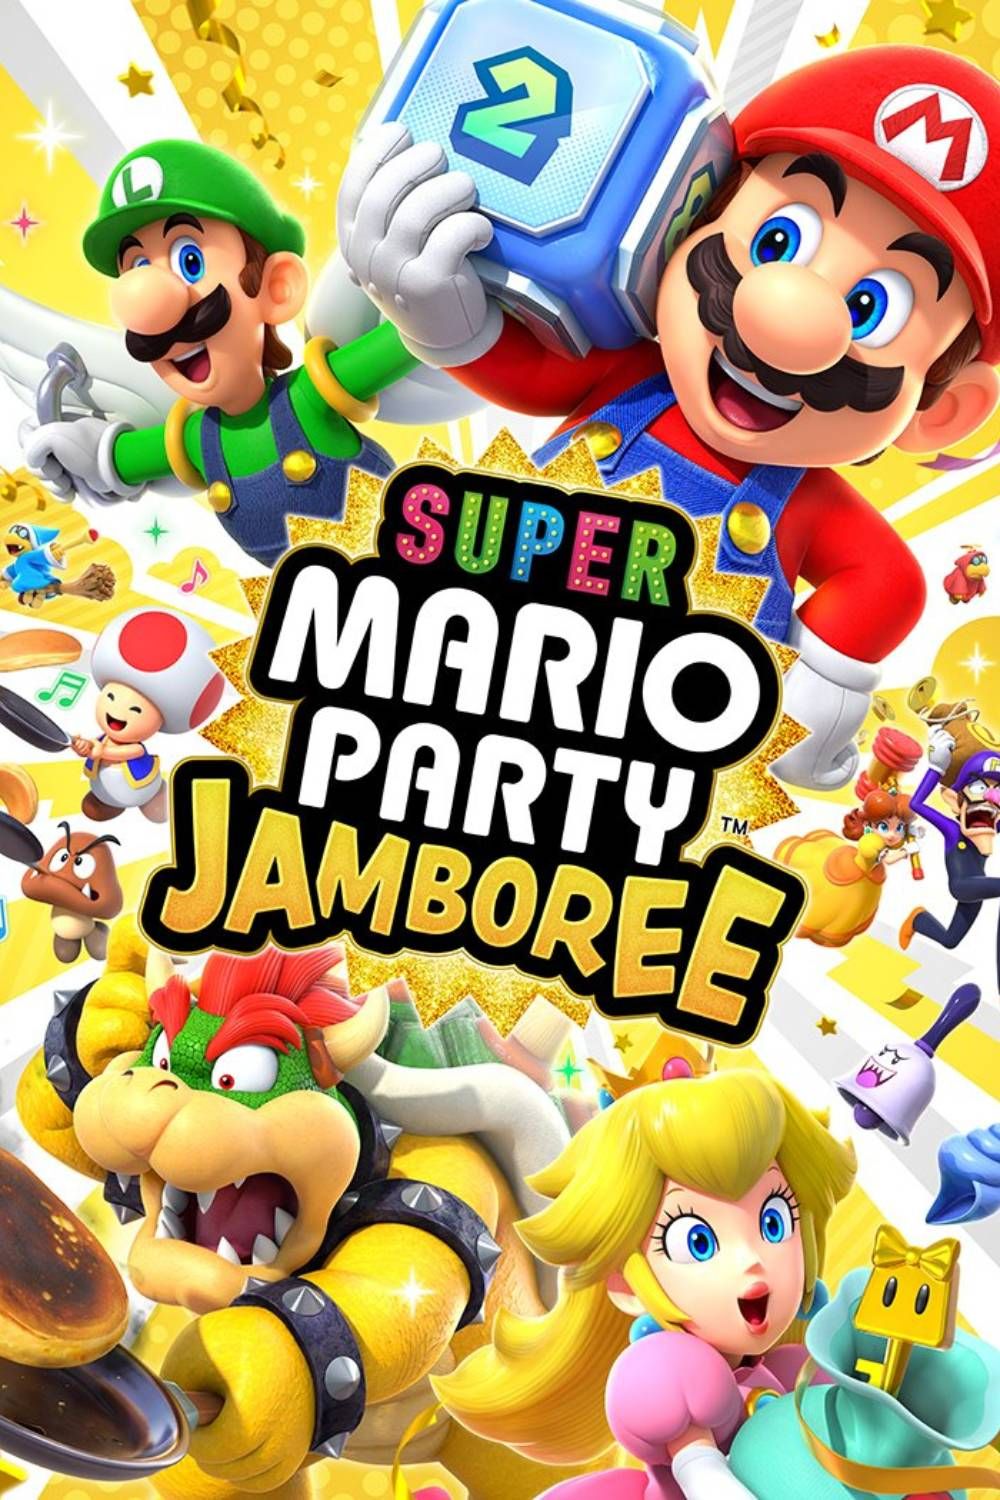 Arte da capa da página de etiqueta do Super Mario Party Jamboree